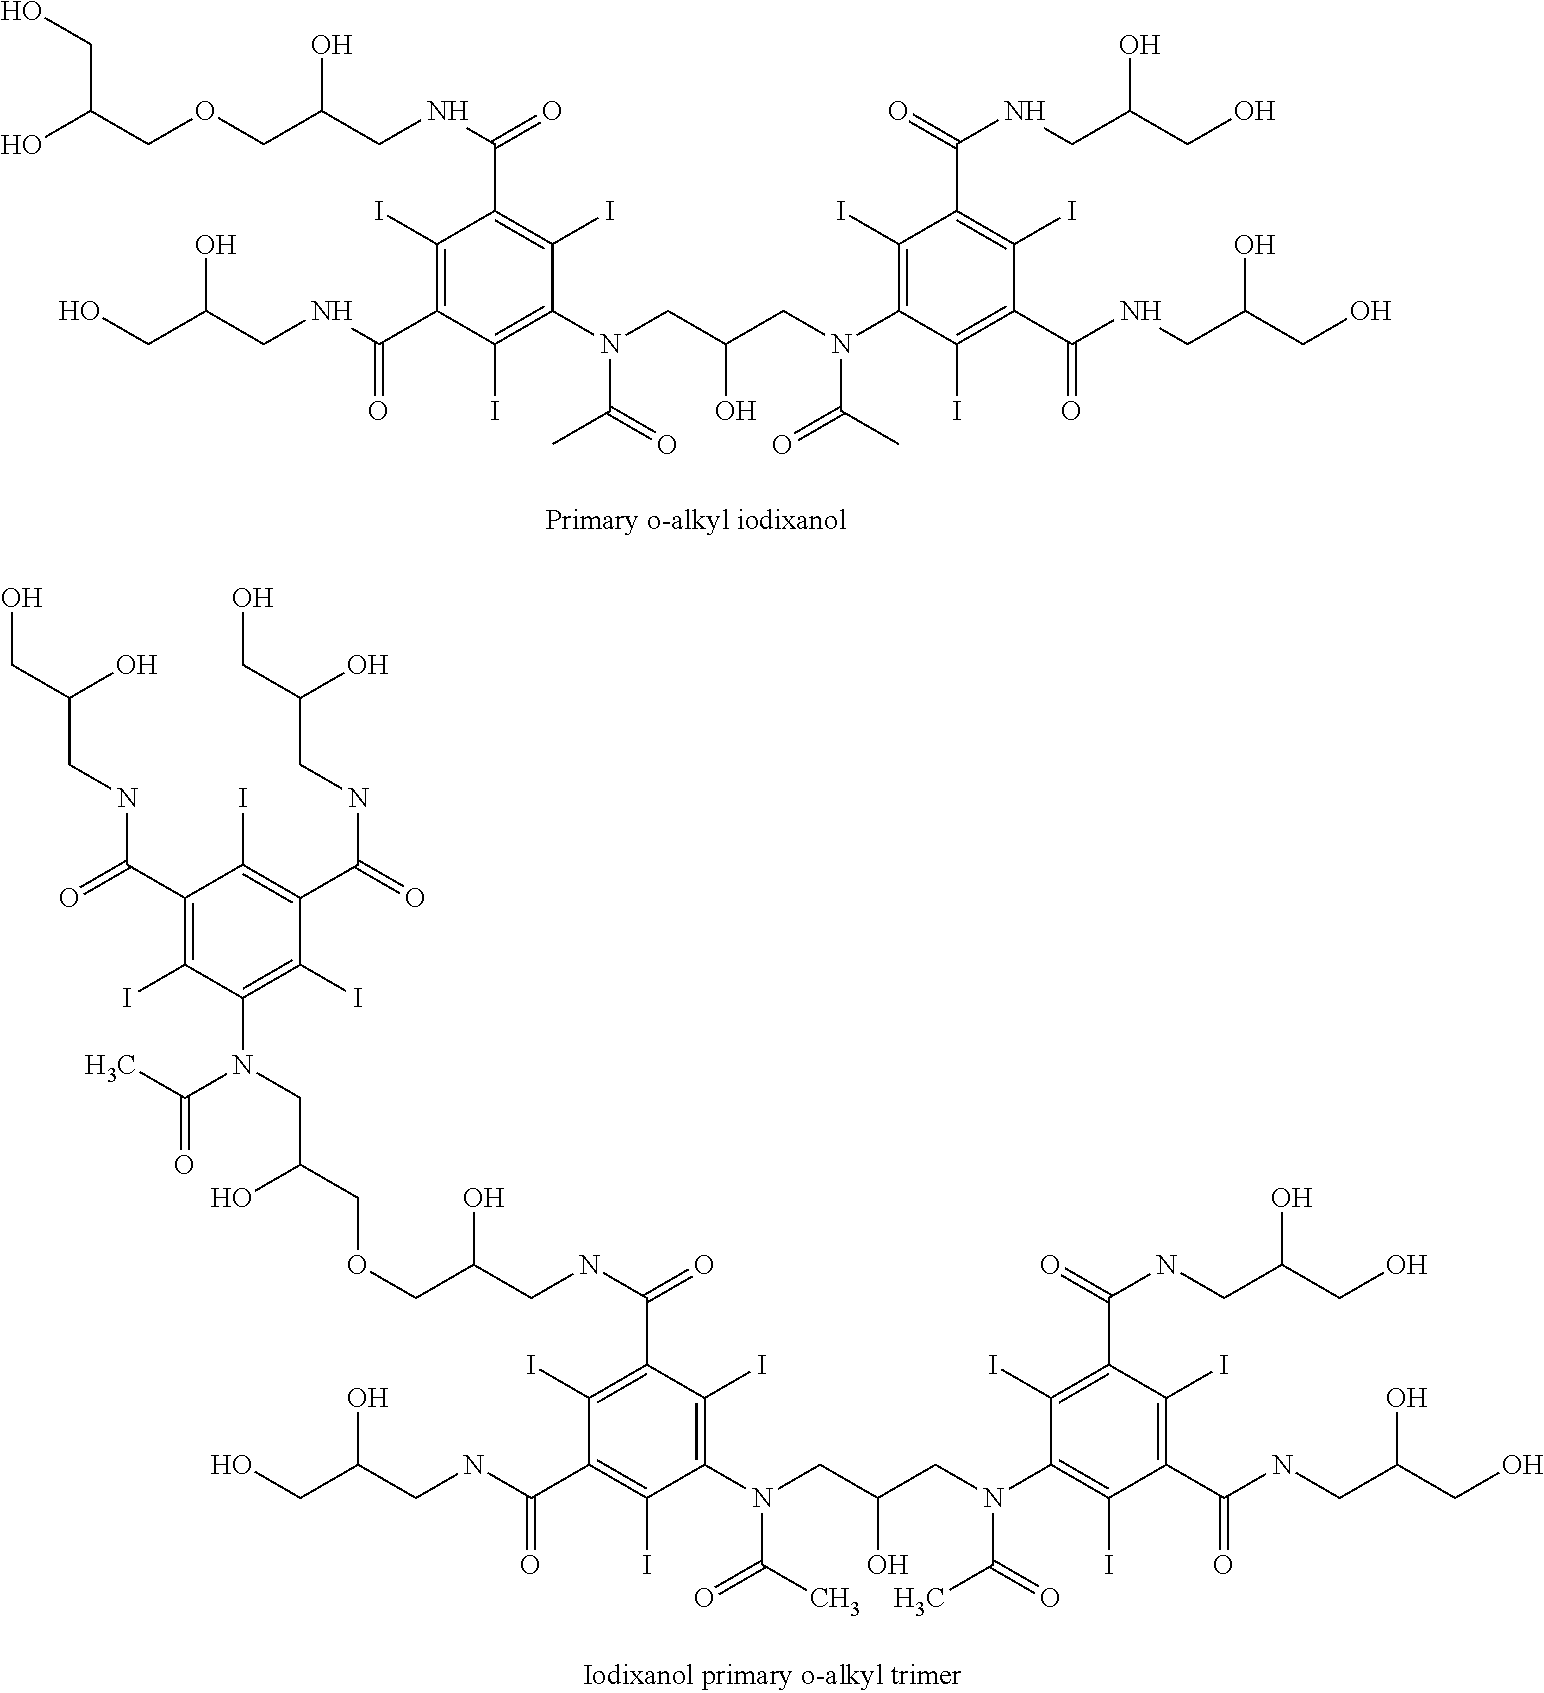 Sytnhesis of iodixanol in propyleneglycol